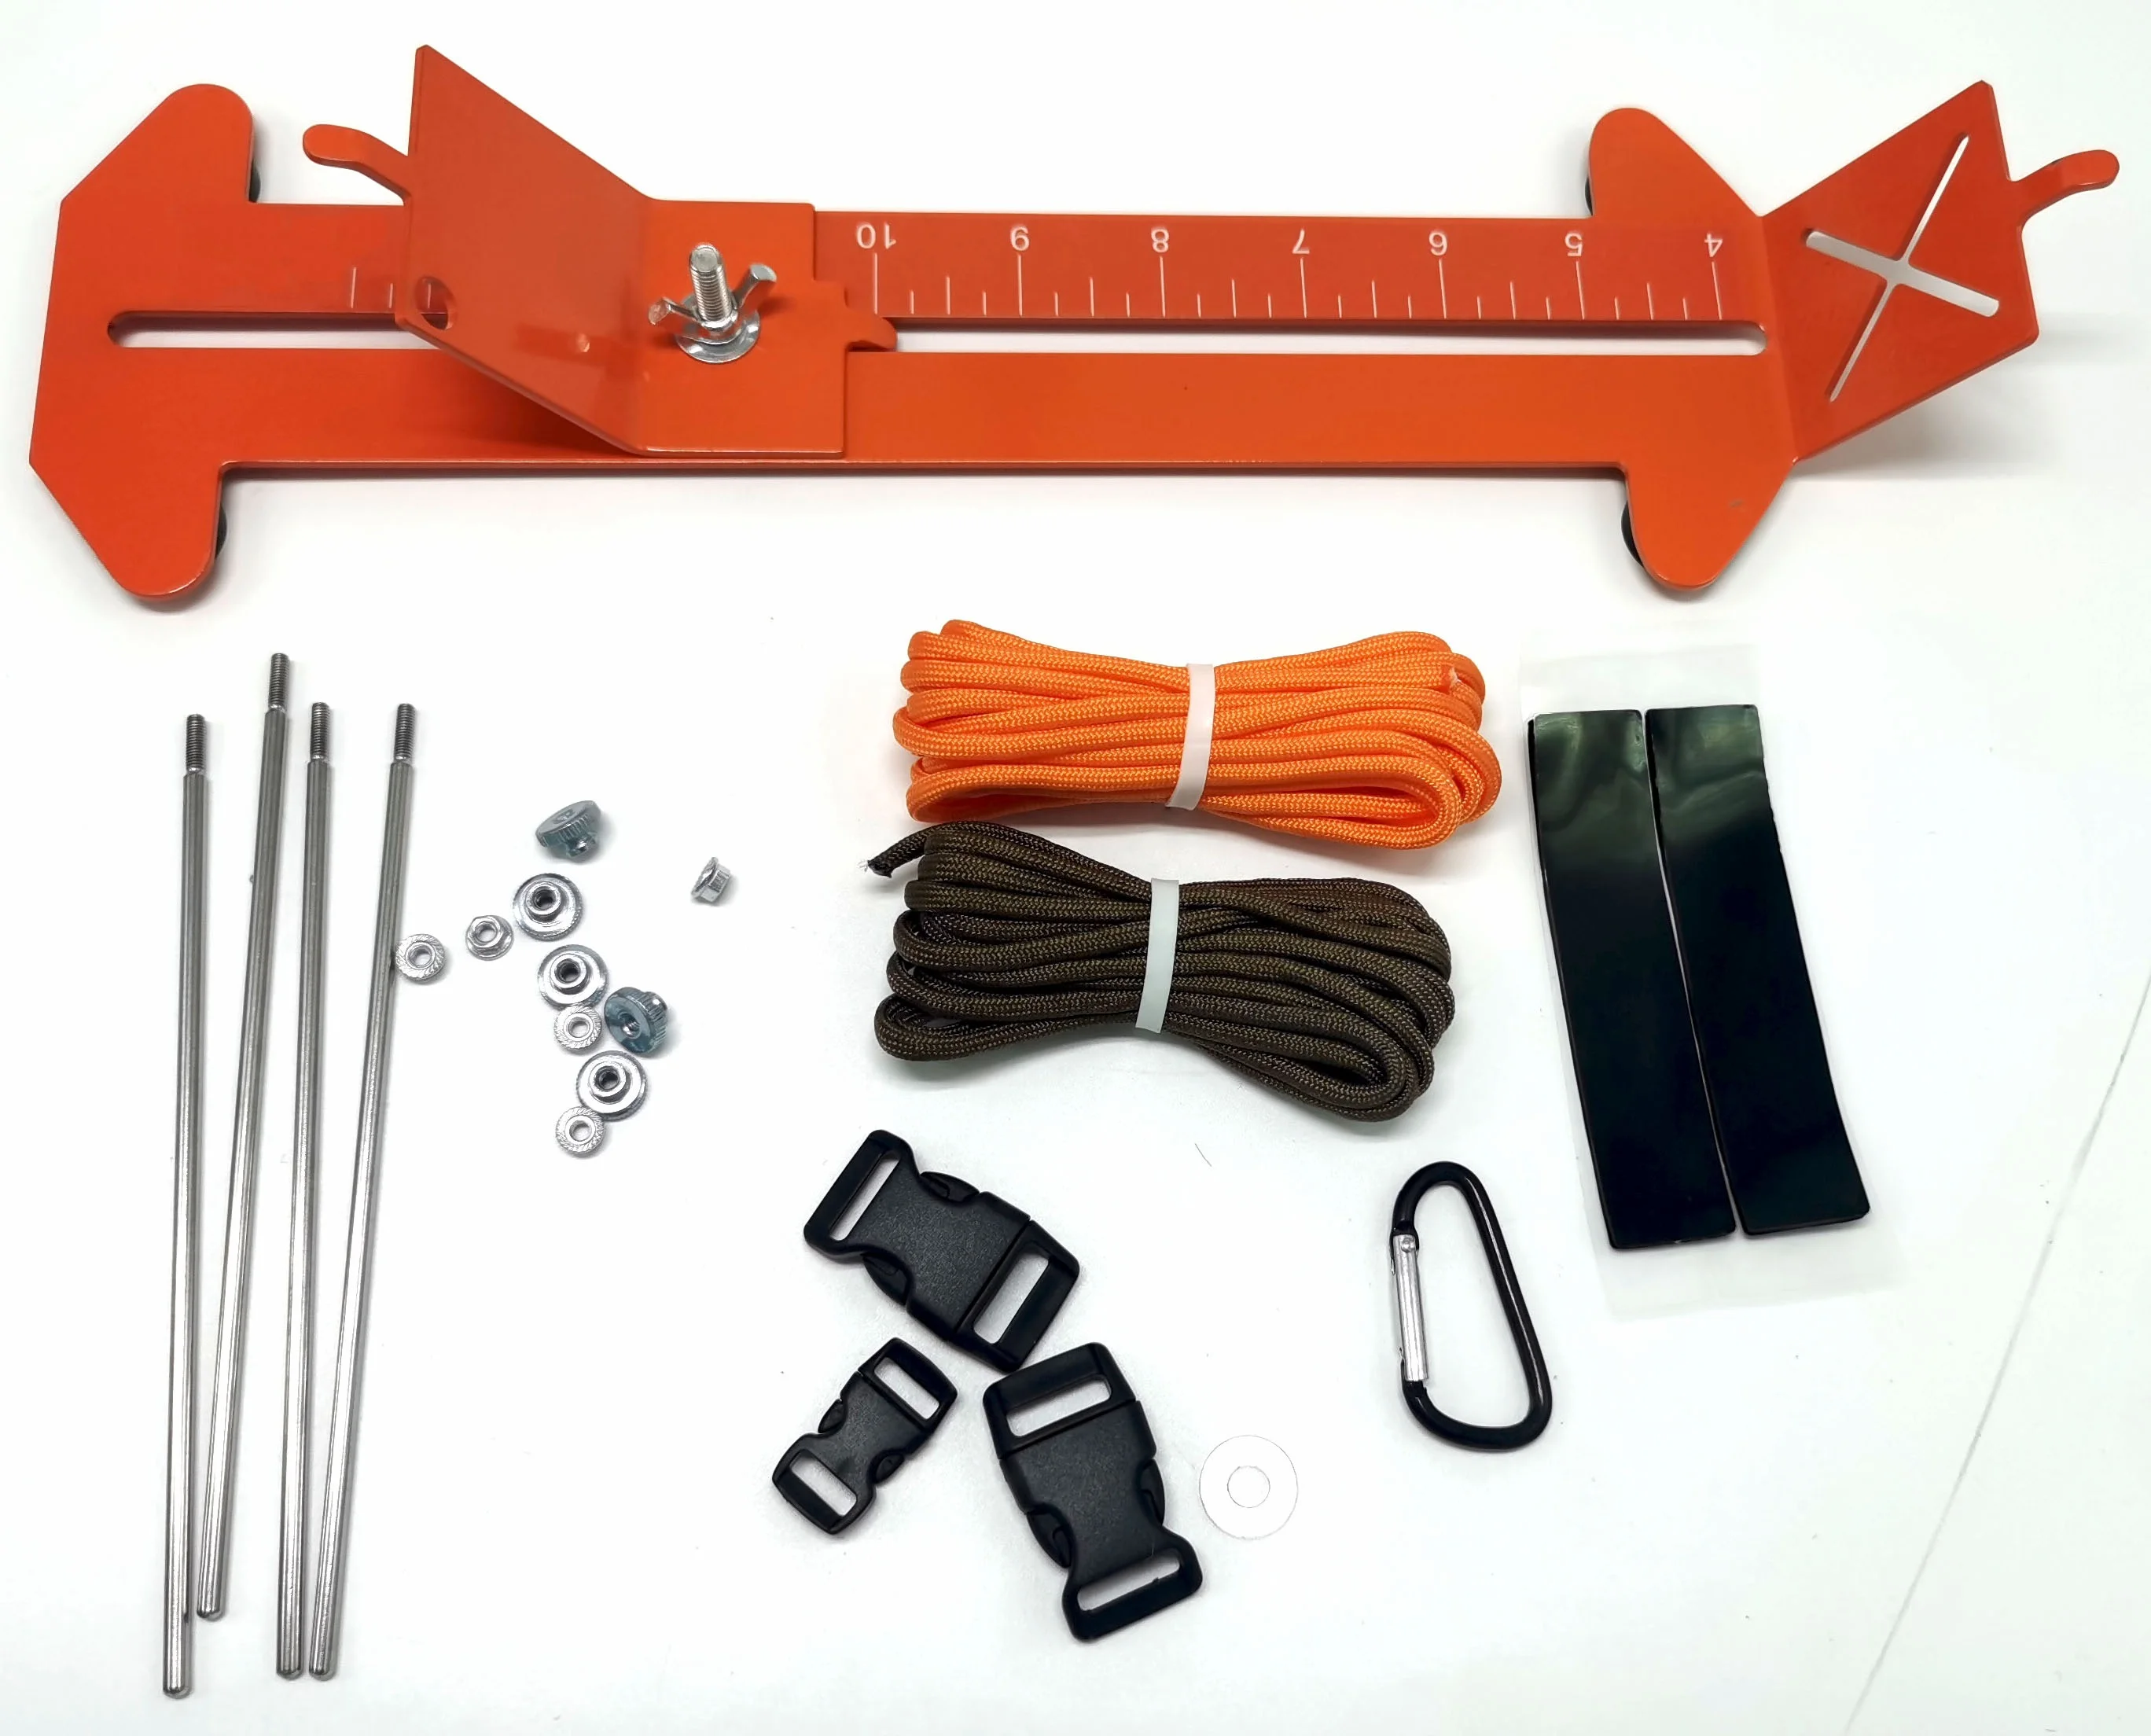 

Adjustable Metal Weaving New Monkey Fist Jig Paracord Jig Bracelet Maker Paracord Tool Kit DIY Craft Maker, Orange/green/army green/gray